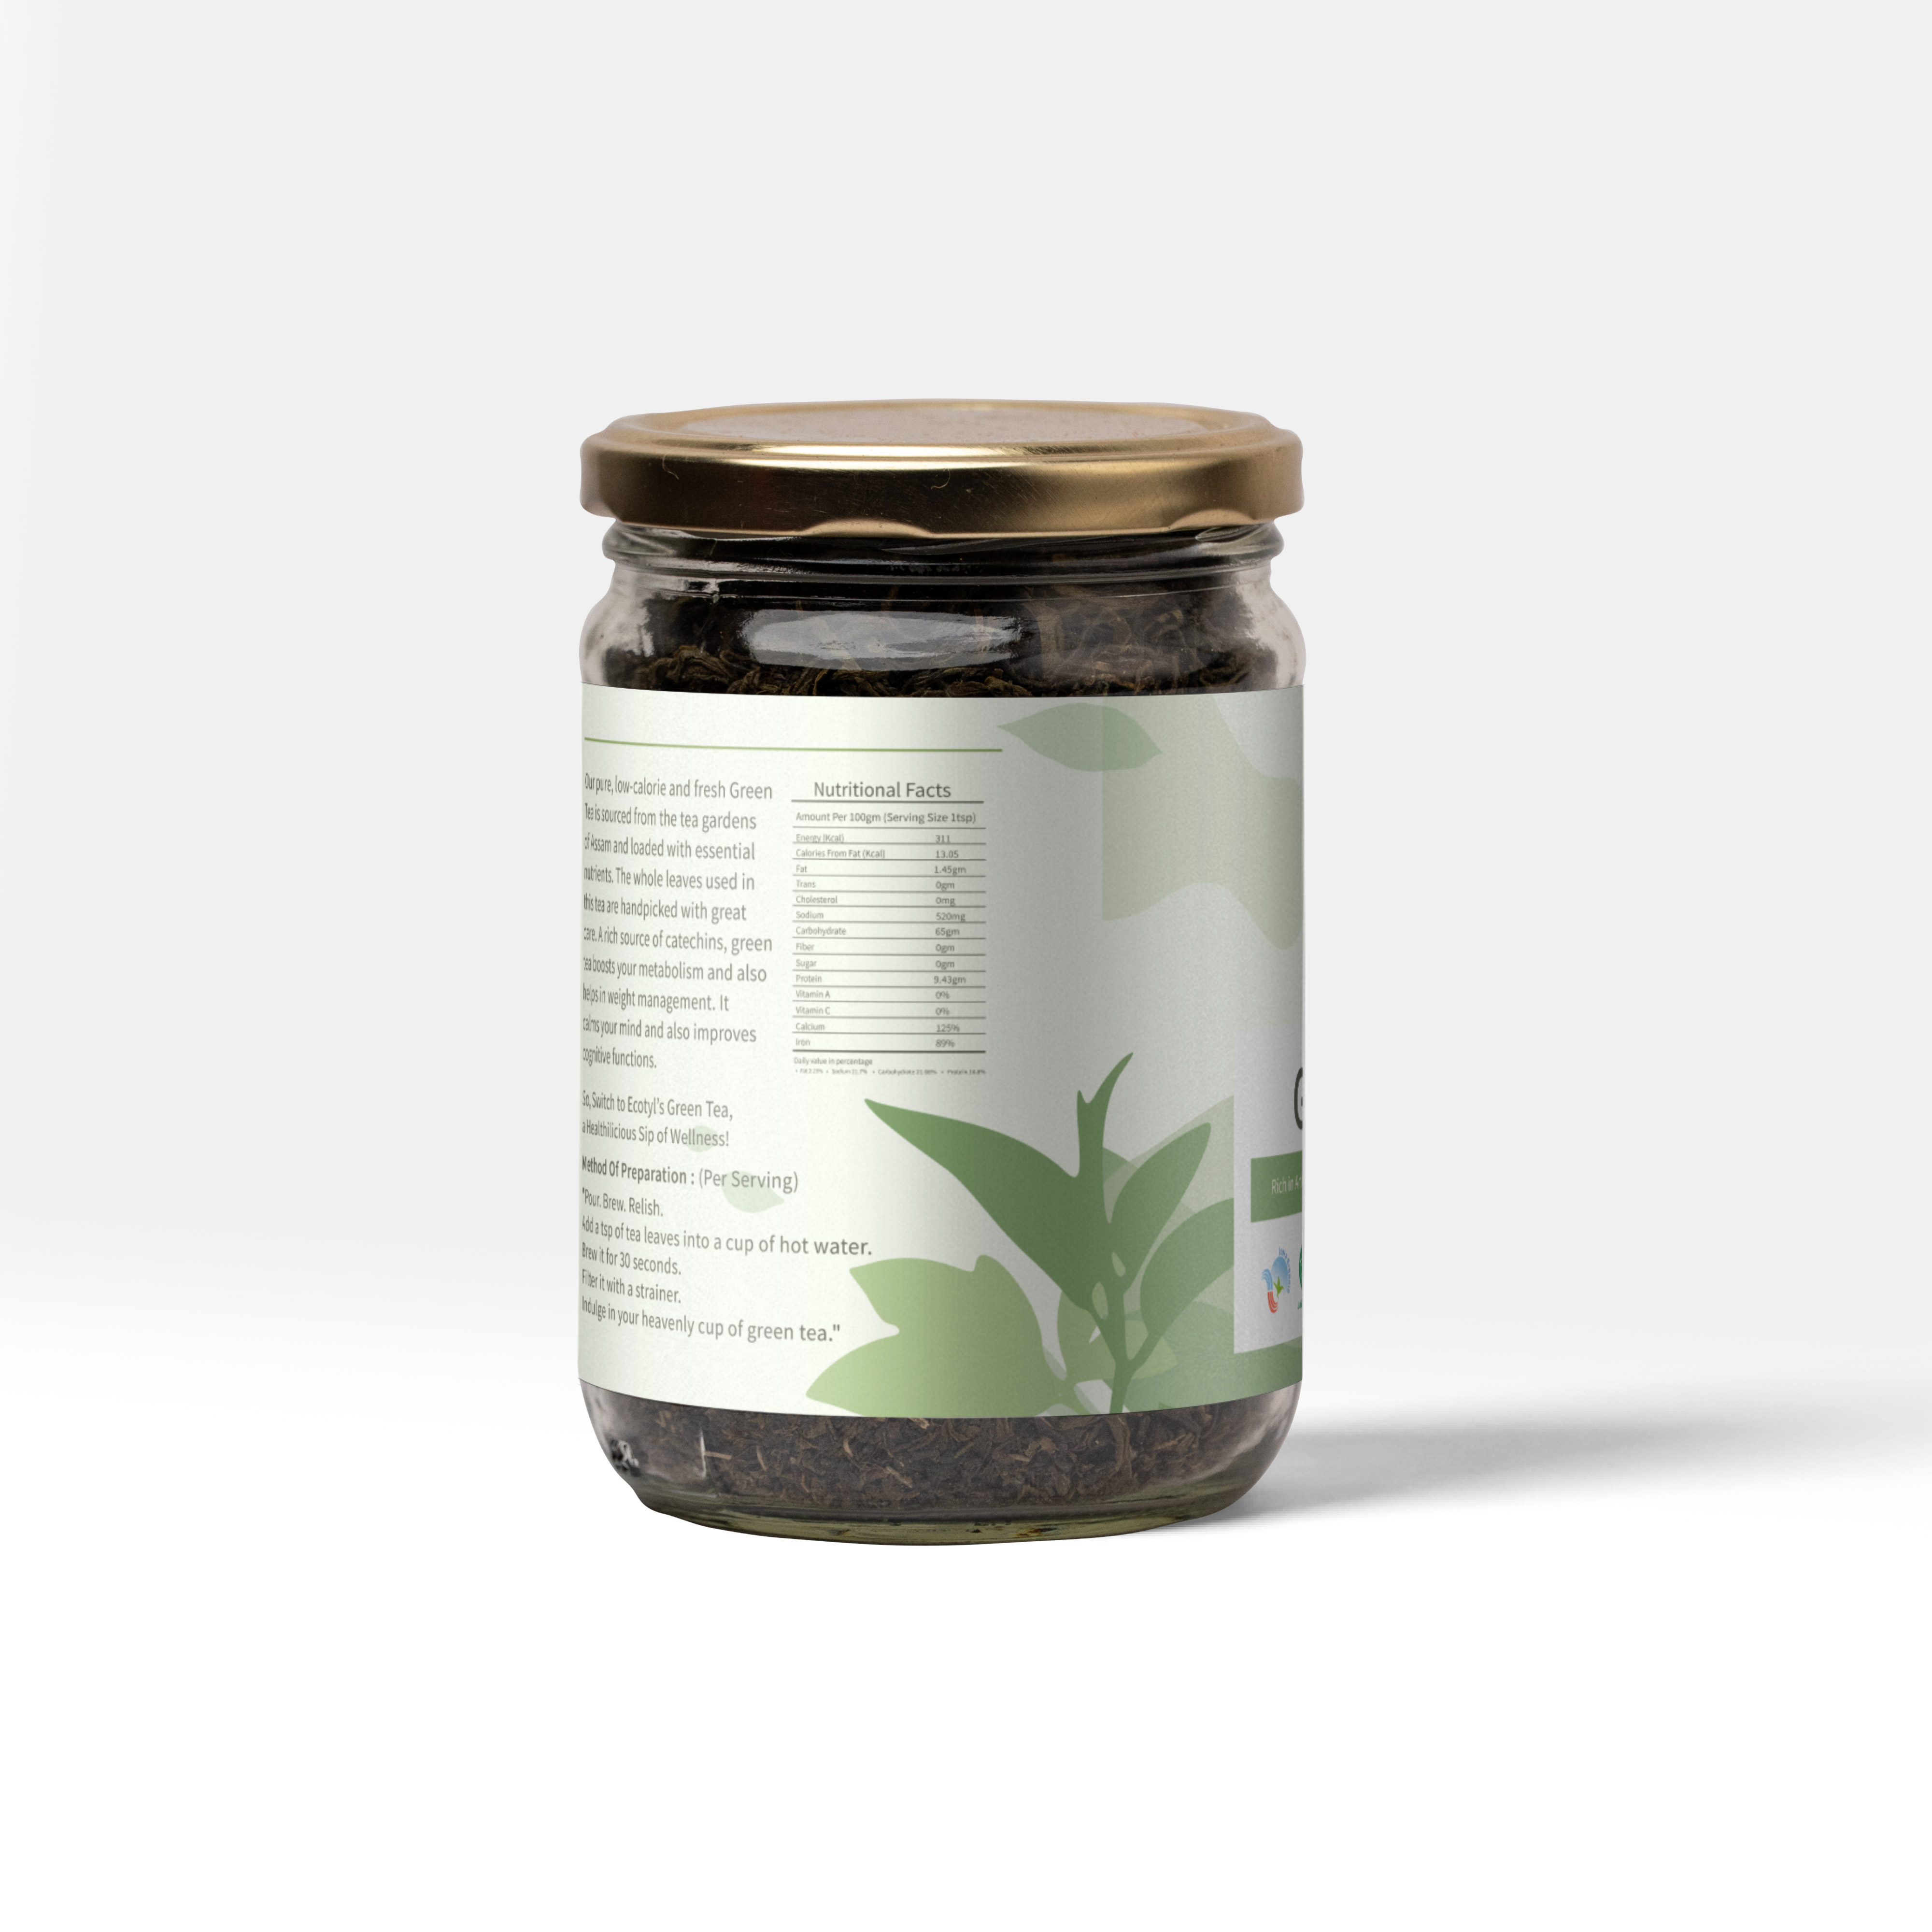 Buy Ecotyl Organic Green Tea -  180 g at Best Price Online